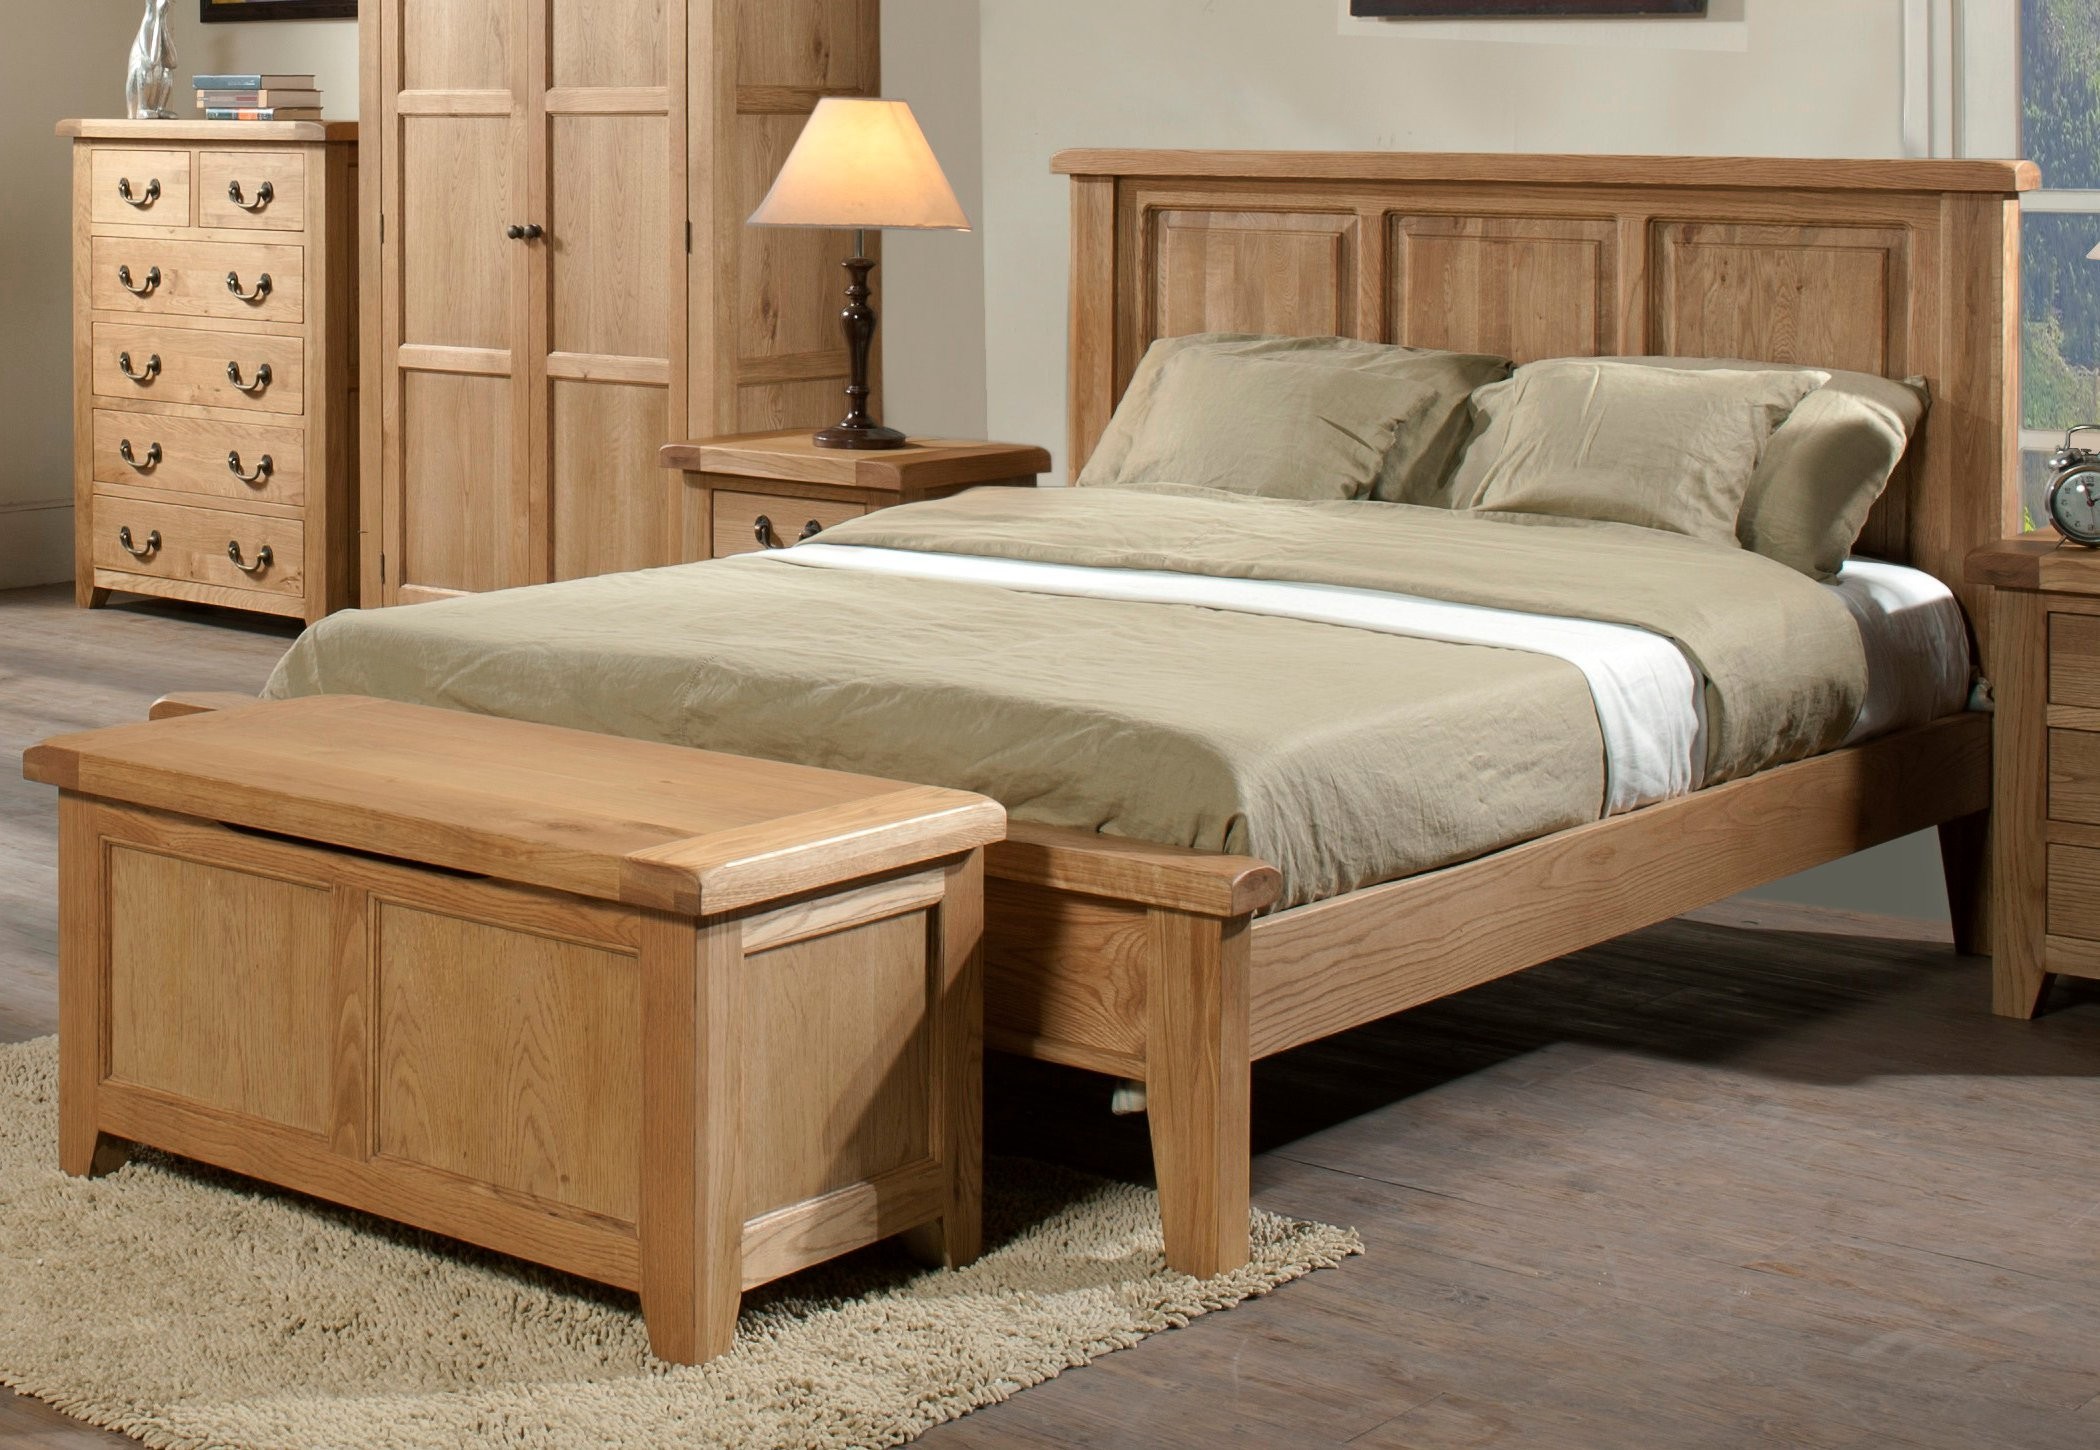 Luxury Oak Wood Beds • The Ignite Show